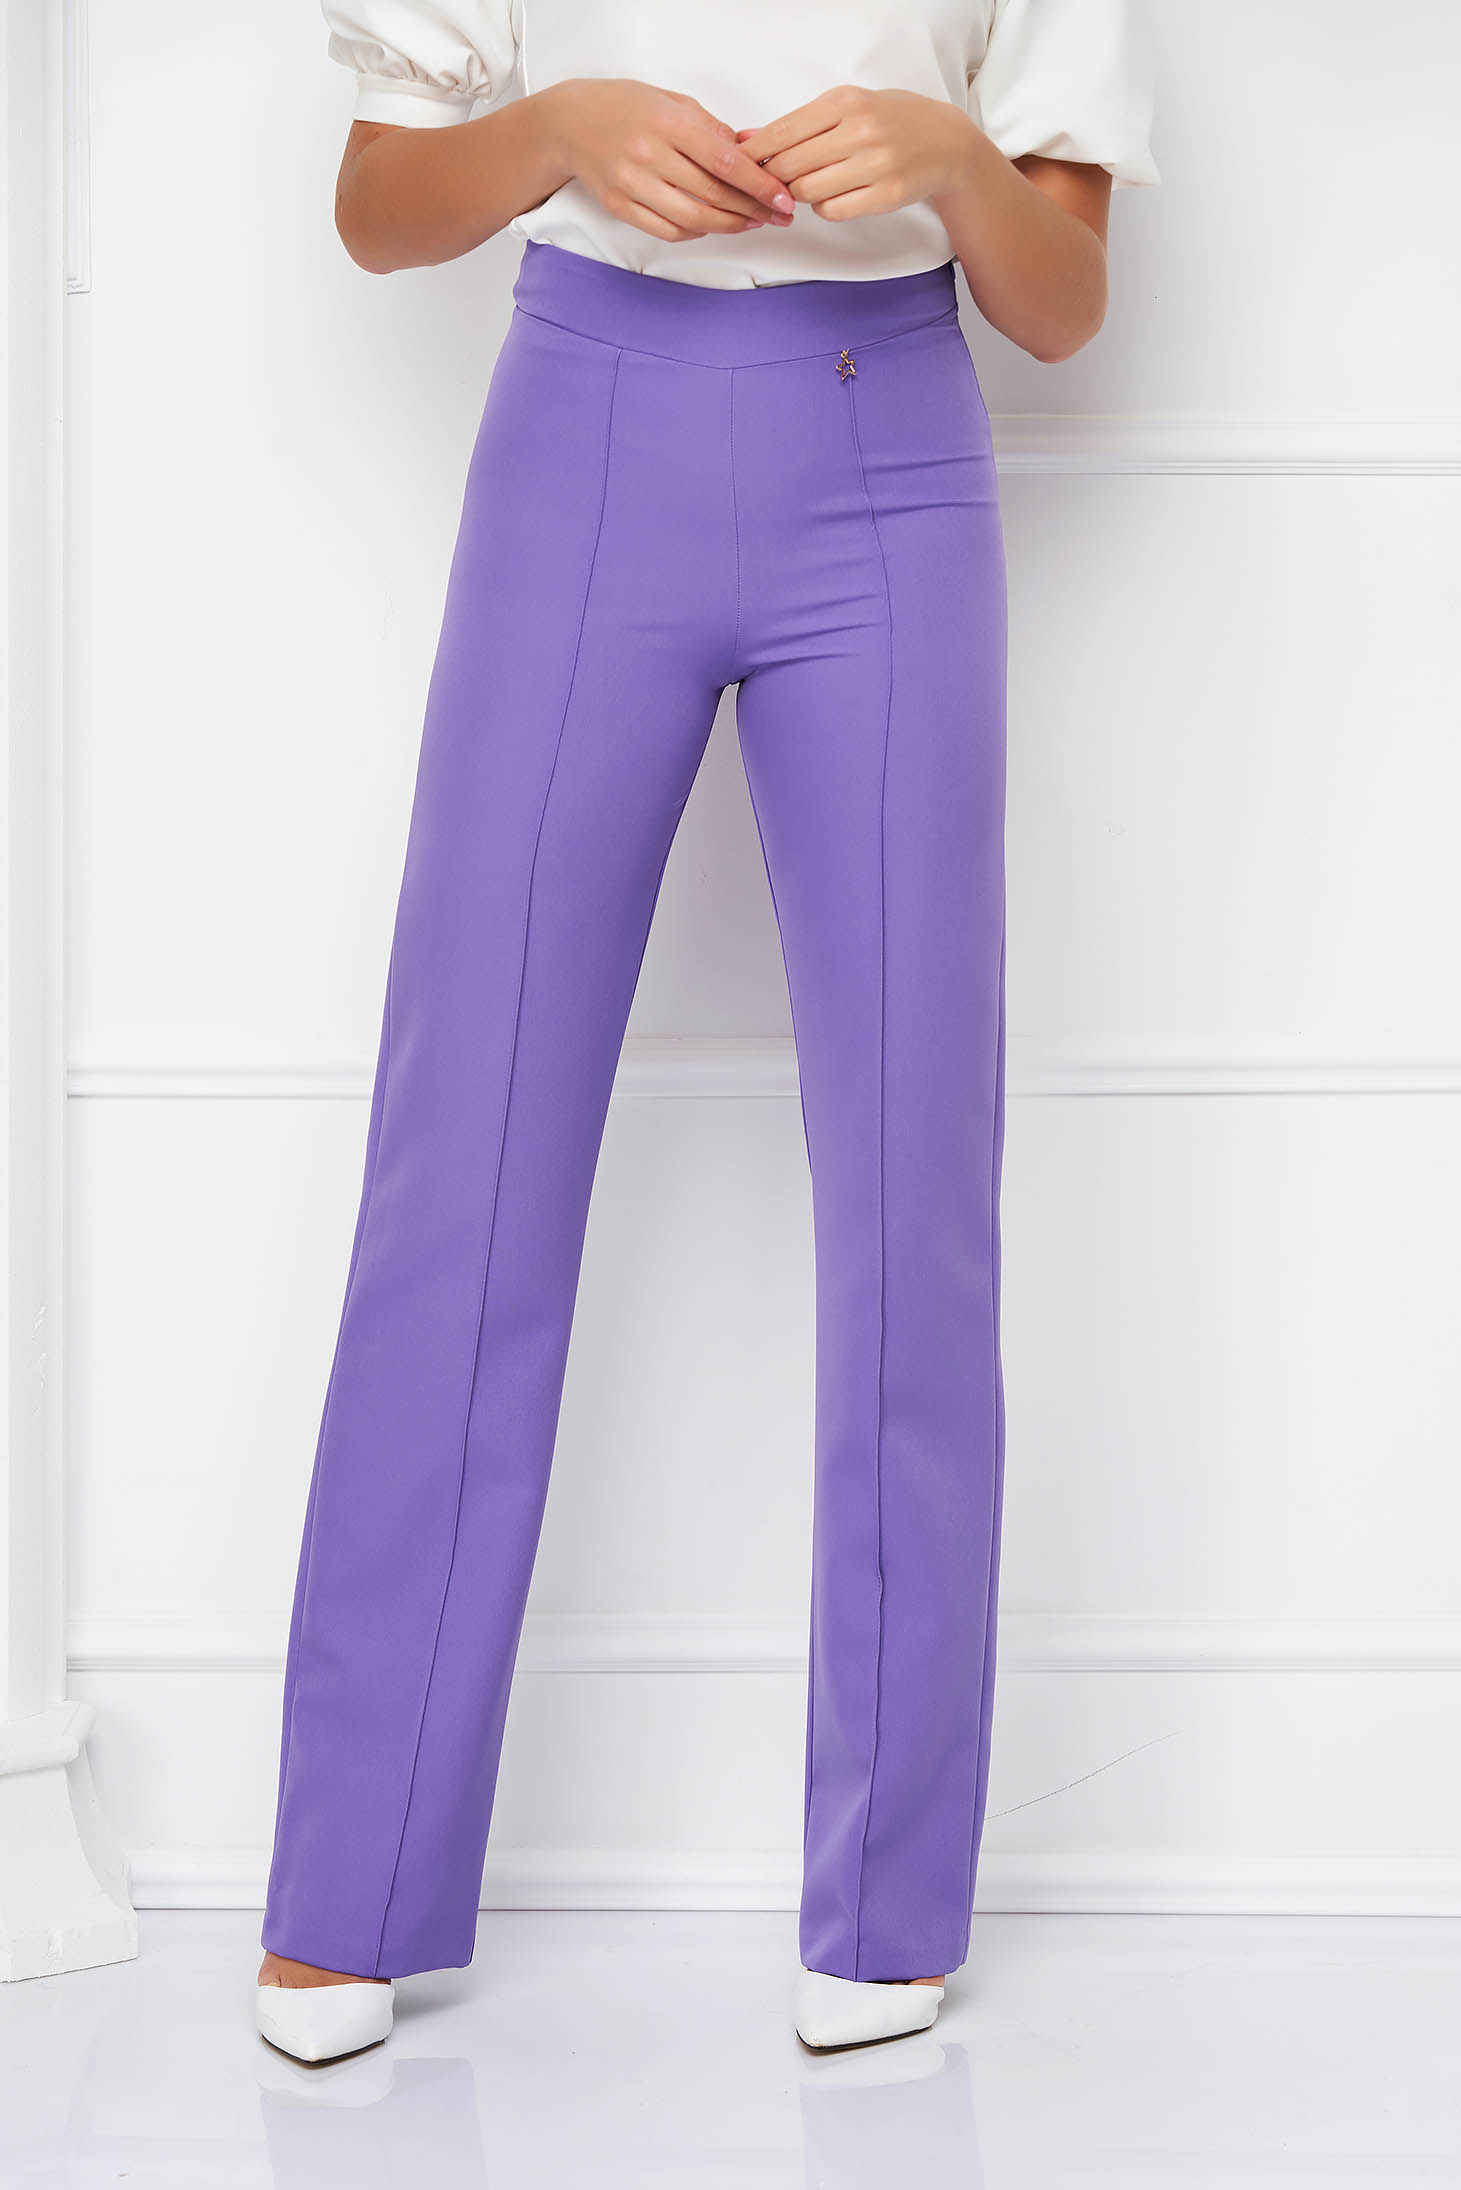 Pantaloni din stofa usor elastica mov lungi evazati cu talie inalta - StarShinerS 1 - StarShinerS.ro